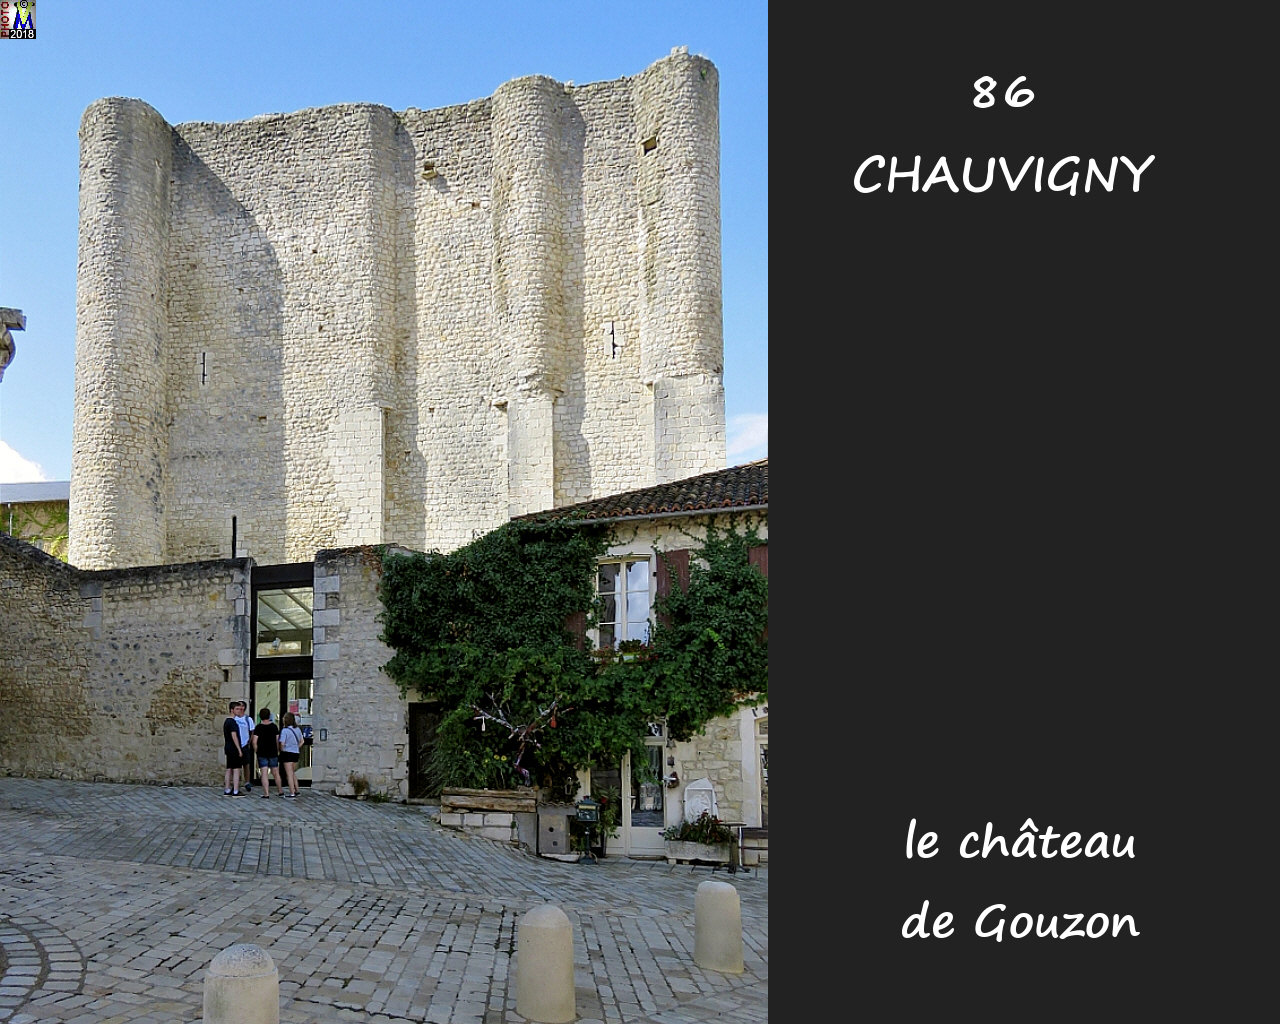 86CHAUVIGNY_chateau-Gouzon_1004.jpg